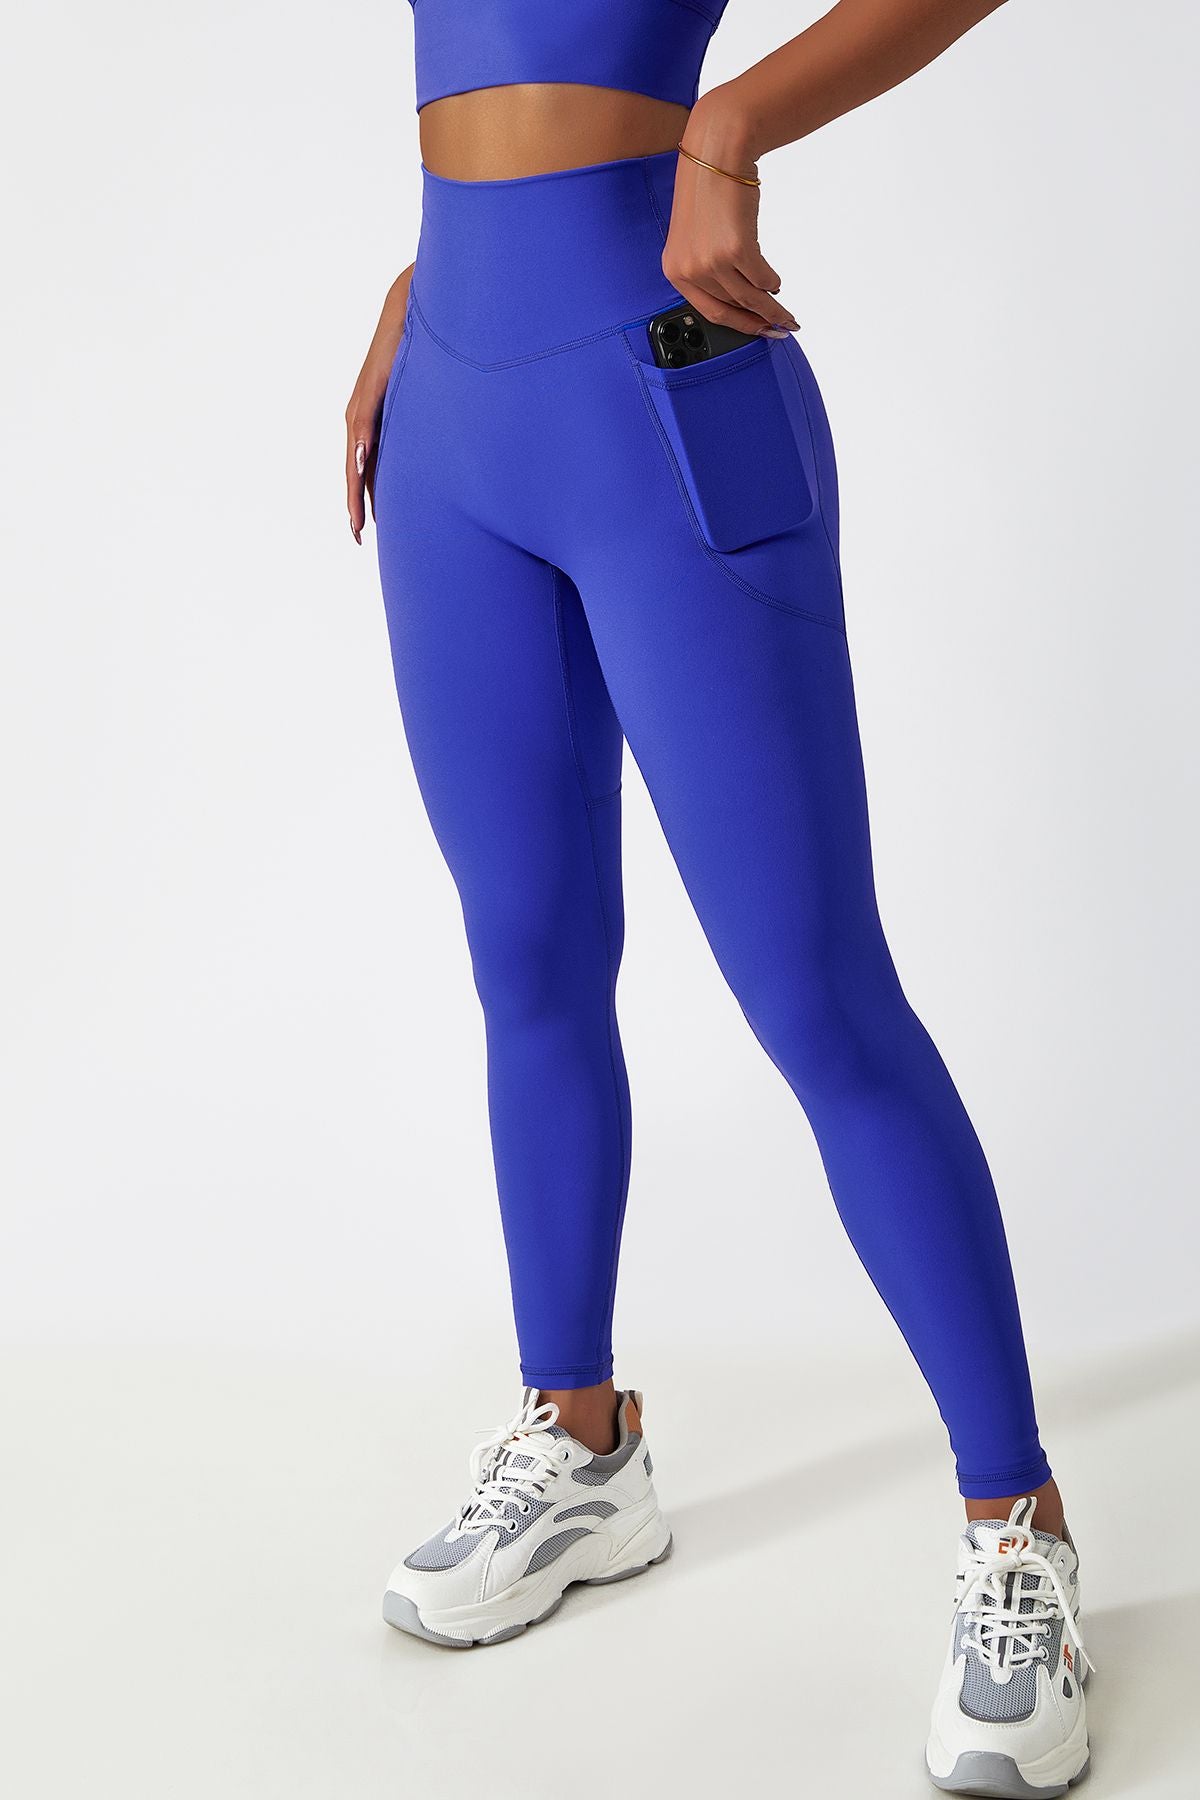 Topshop active sports leggings in blue, ASOS